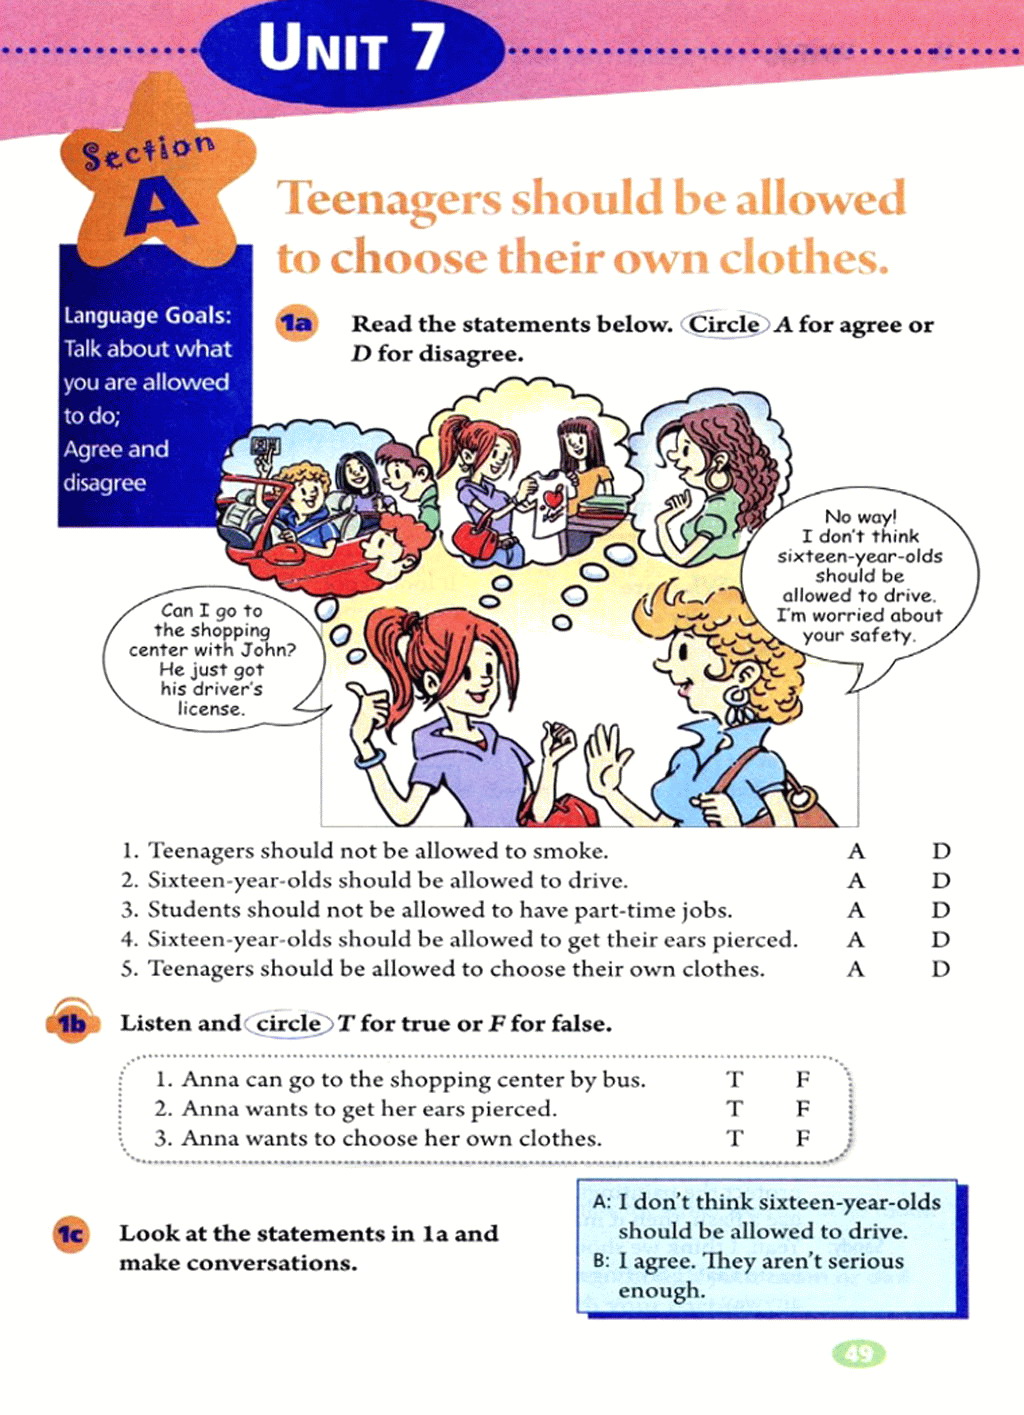 部编版九年级英语全册Unit 7 Teenagers should be allowed to choose their own cloth第0页